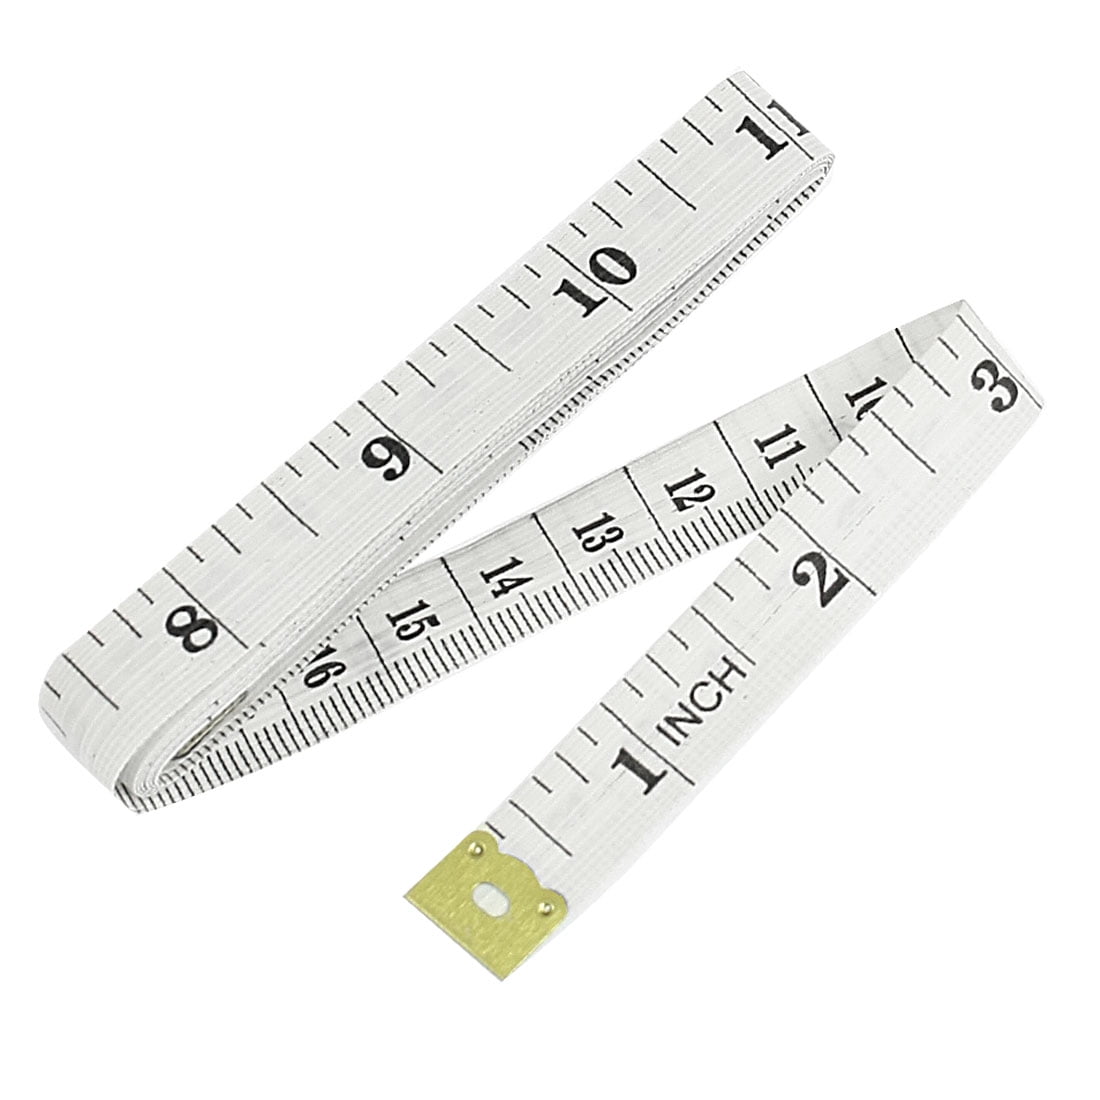 Home Measuring Tool Mini Key Chain Cloth Sewing Tape Measure Retractable Ruler 